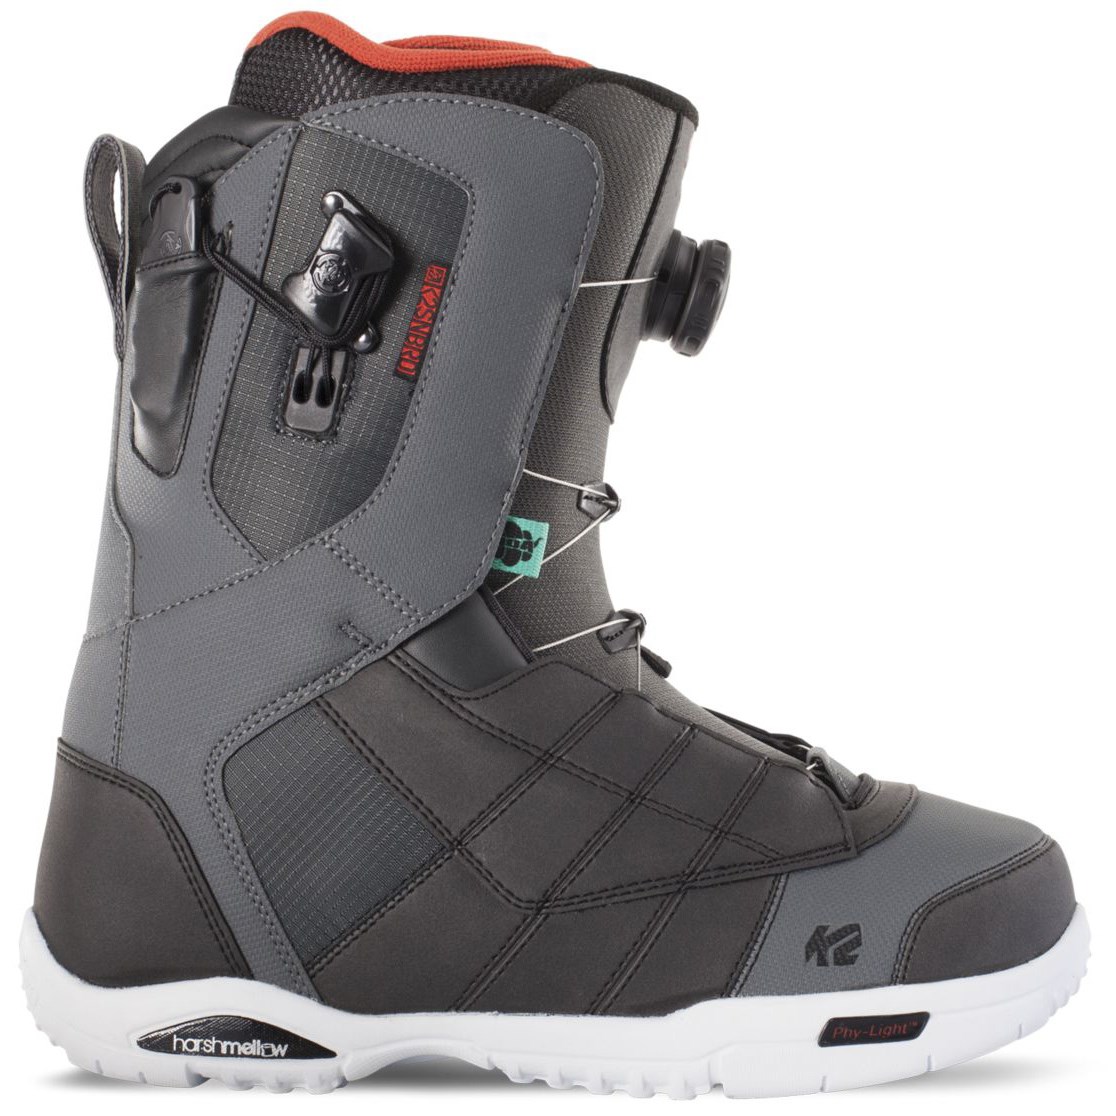 Revision Senator Healthy K2 Seem Snowboard Boots 2016 | evo